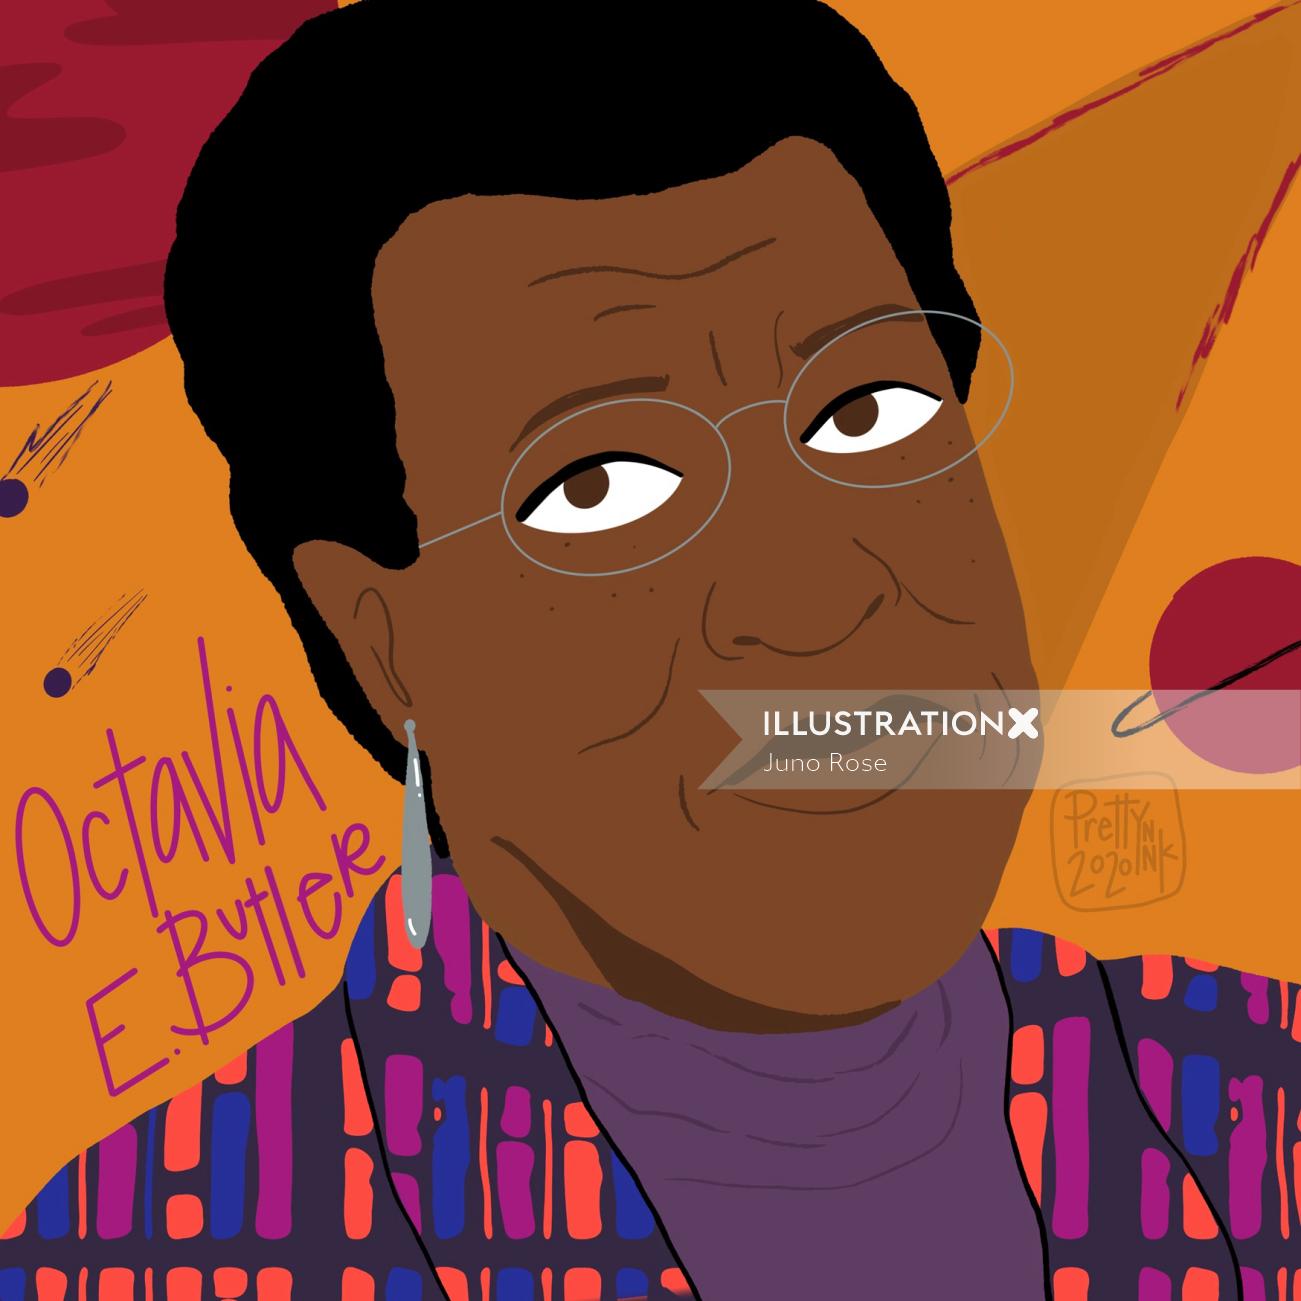 Portraiture of Octavia E. Butler, American science fiction author